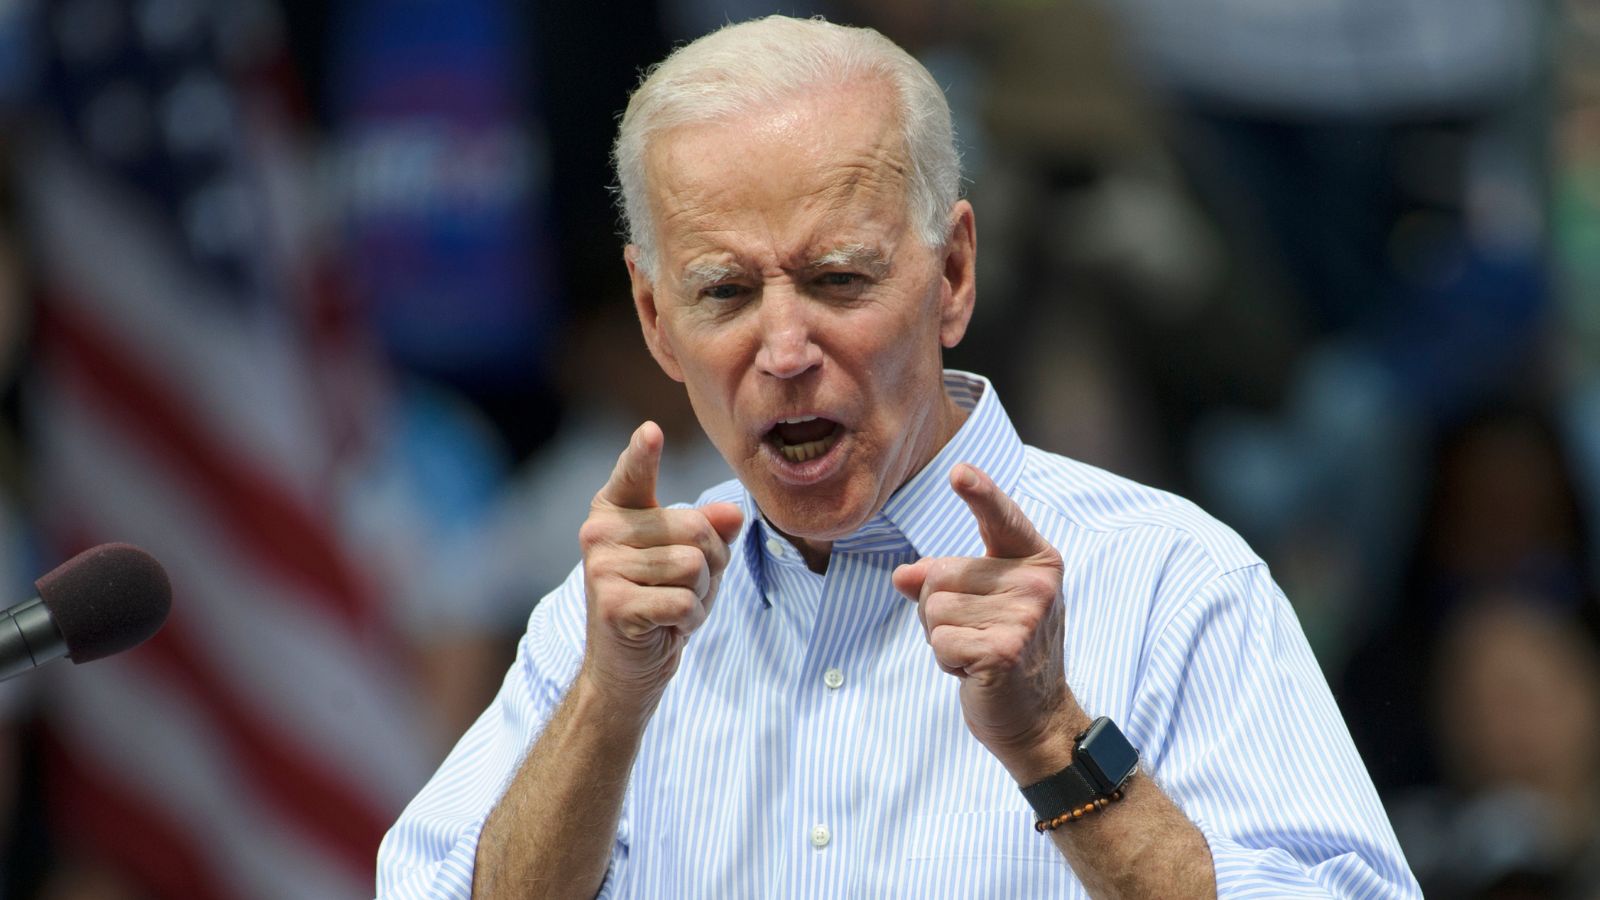 Biden’s Bewildering Blunders: 15 Jolting Missteps that Rocked the Nation